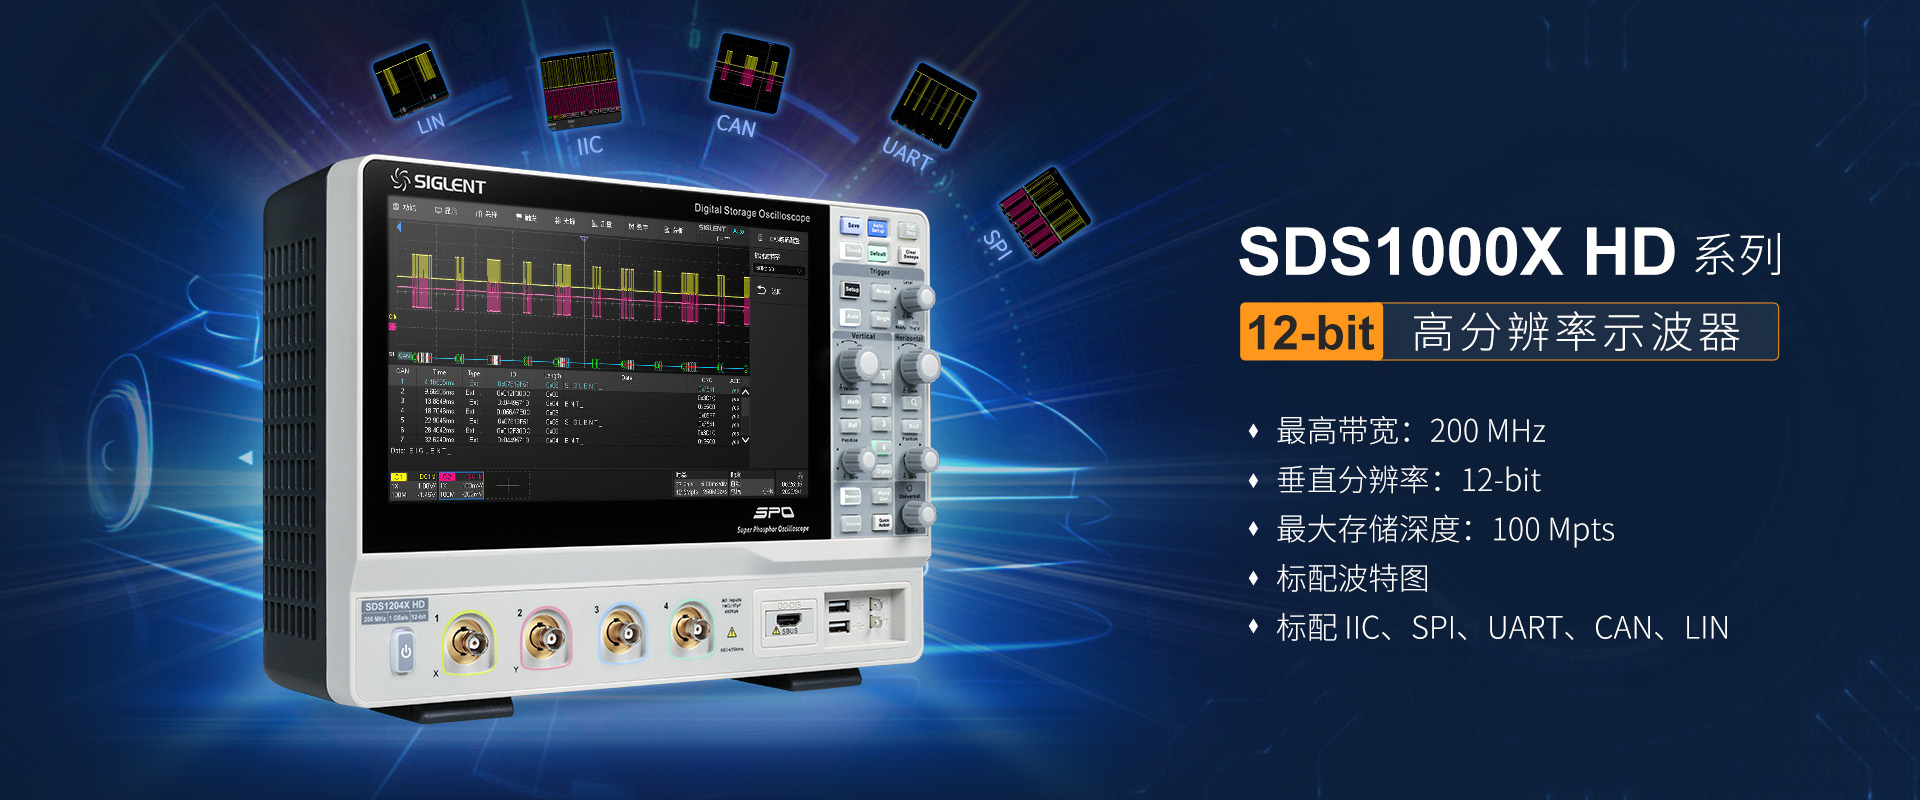 sds1000x hd示波器全新发布